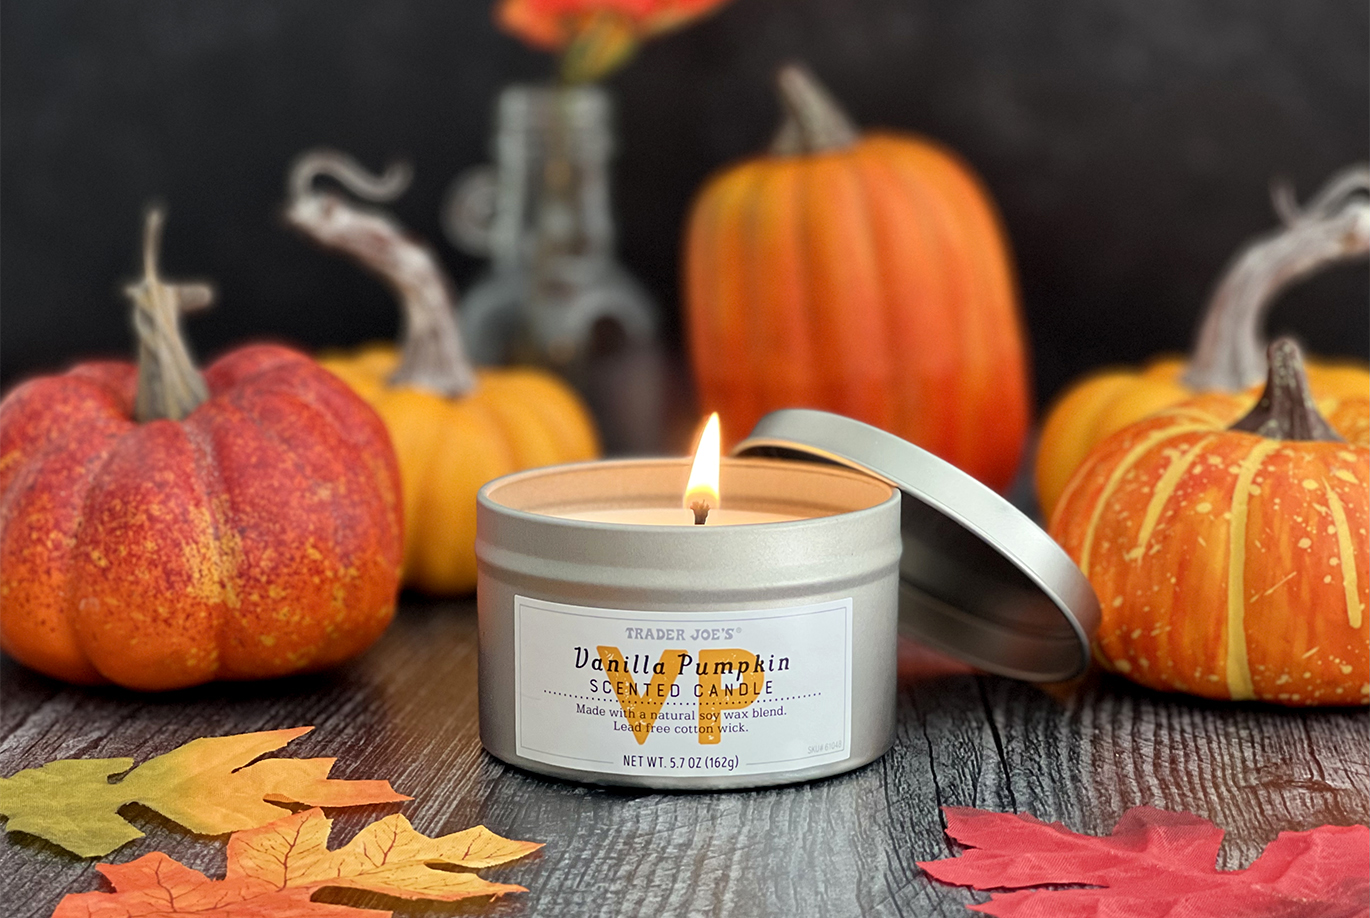 New Trader Joe's Vanilla Pumpkin Scented Candle 5.5 oz Lead Free Cotton Wick 